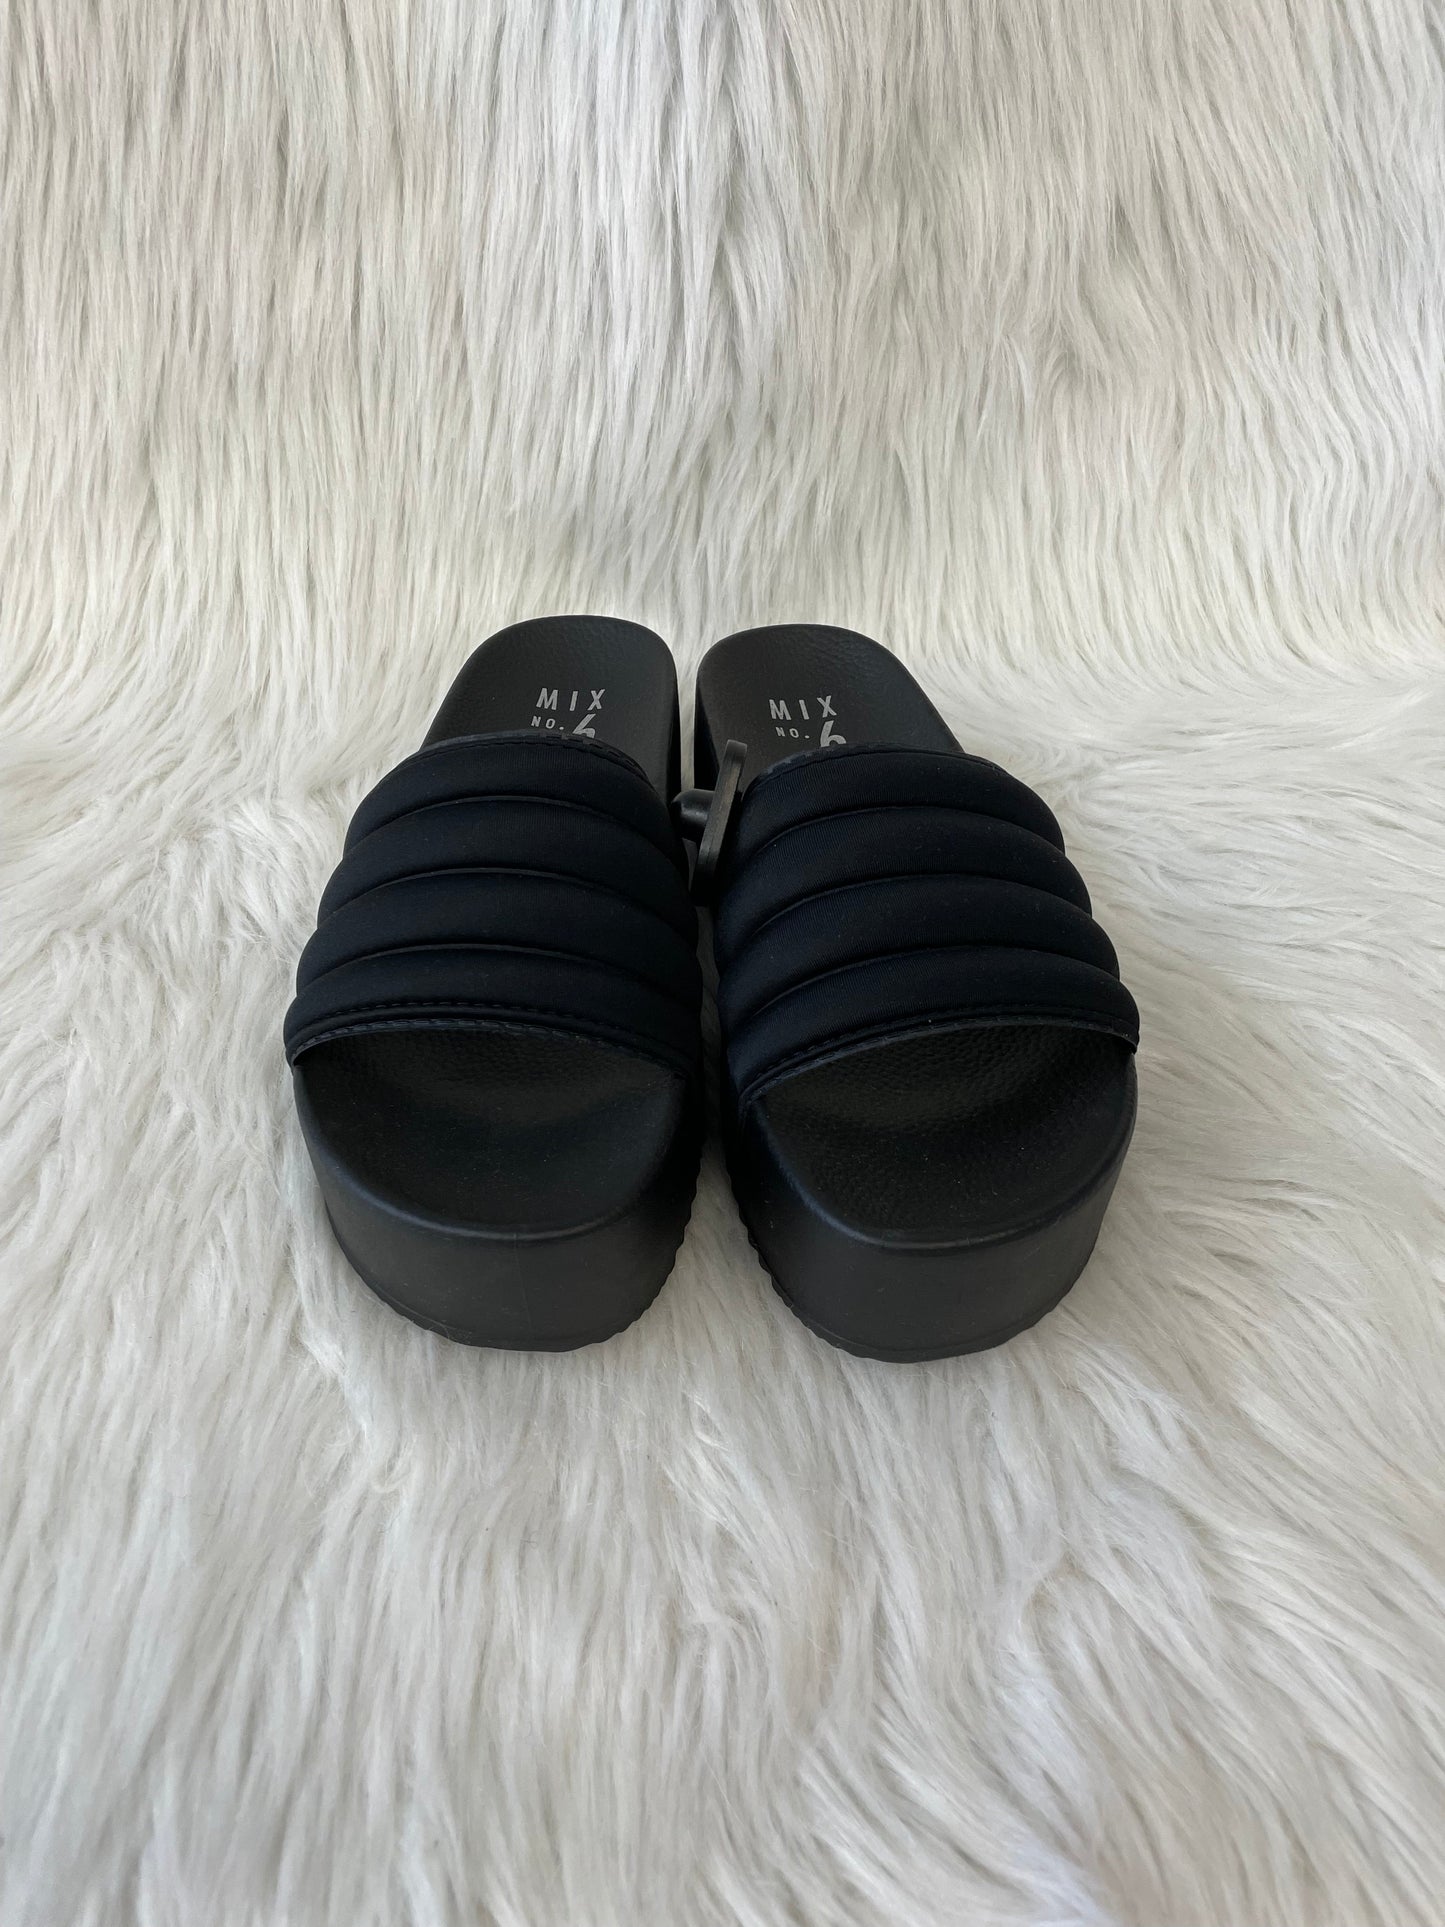 Black Sandals Heels Platform Mix No 6, Size 6